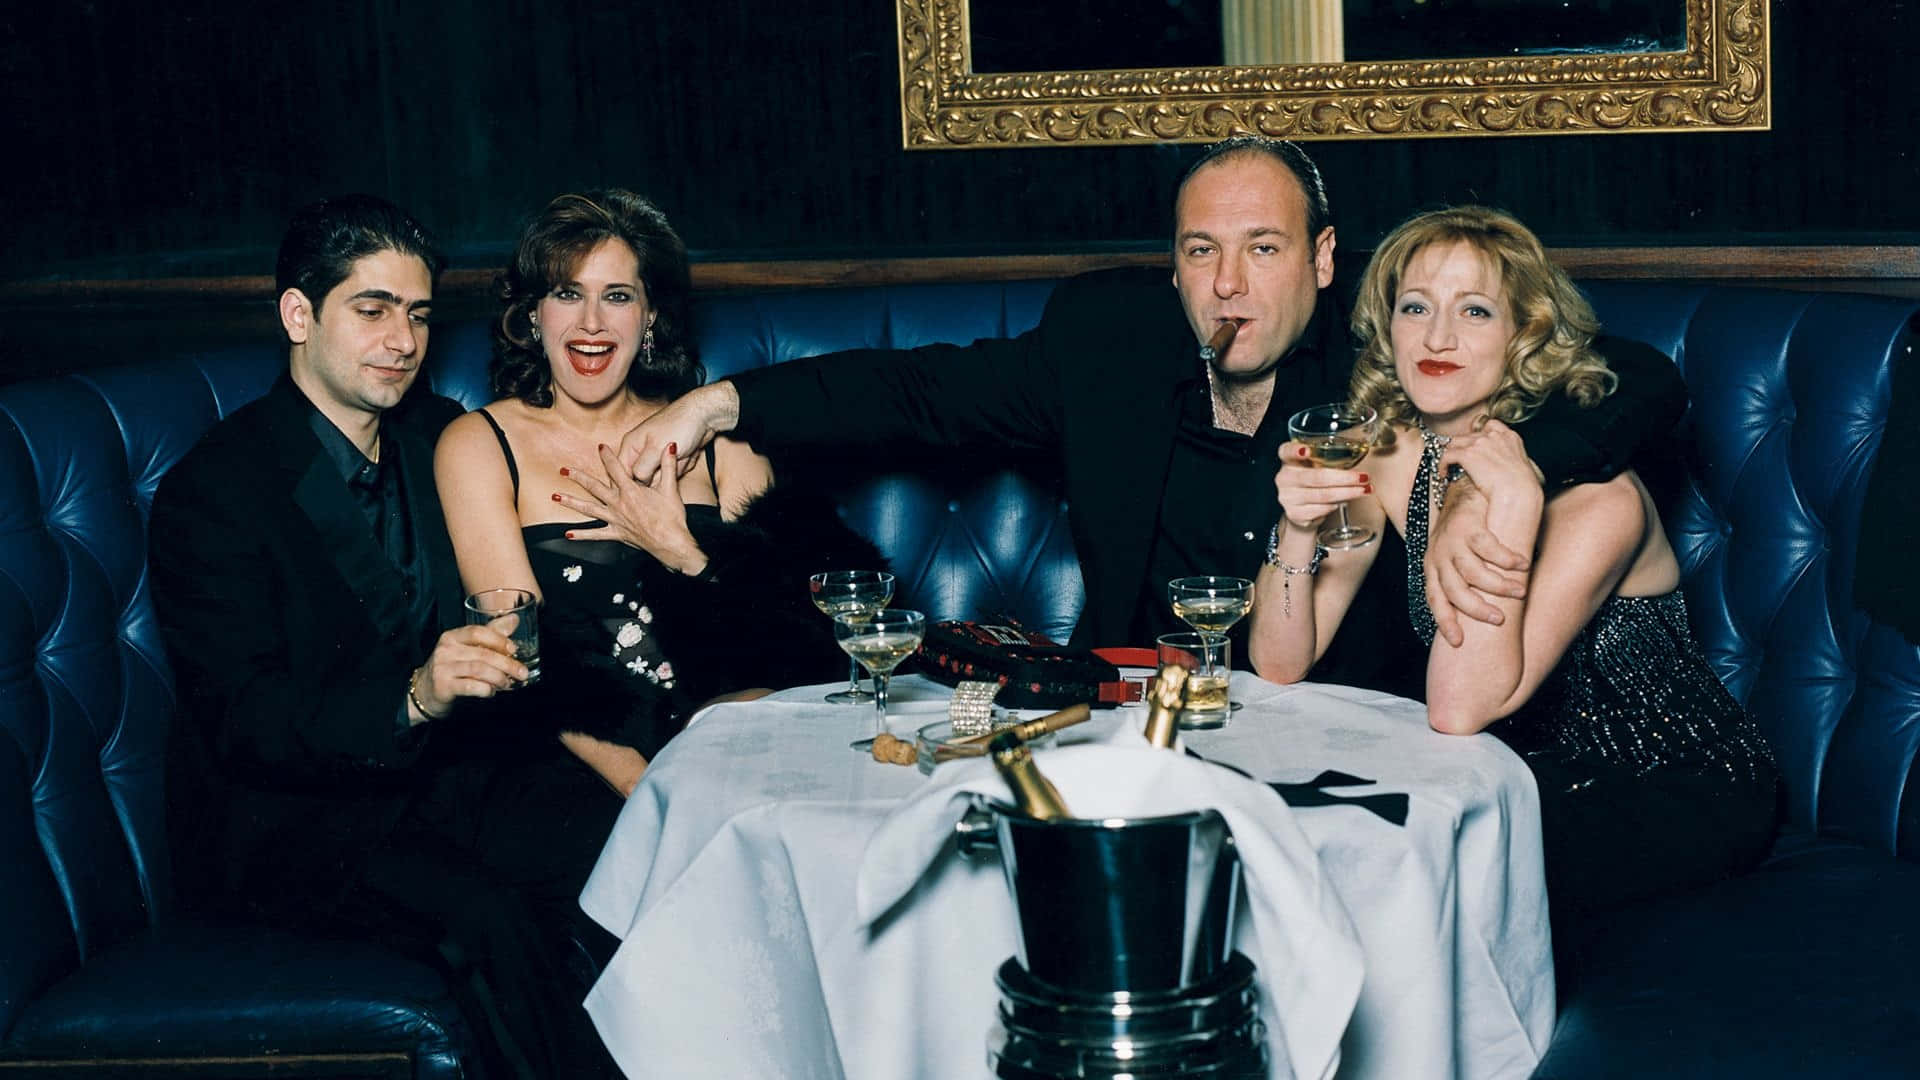 The legendary mob boss Tony Soprano, played by James Gandolfini, in The Sopranos. Wallpaper